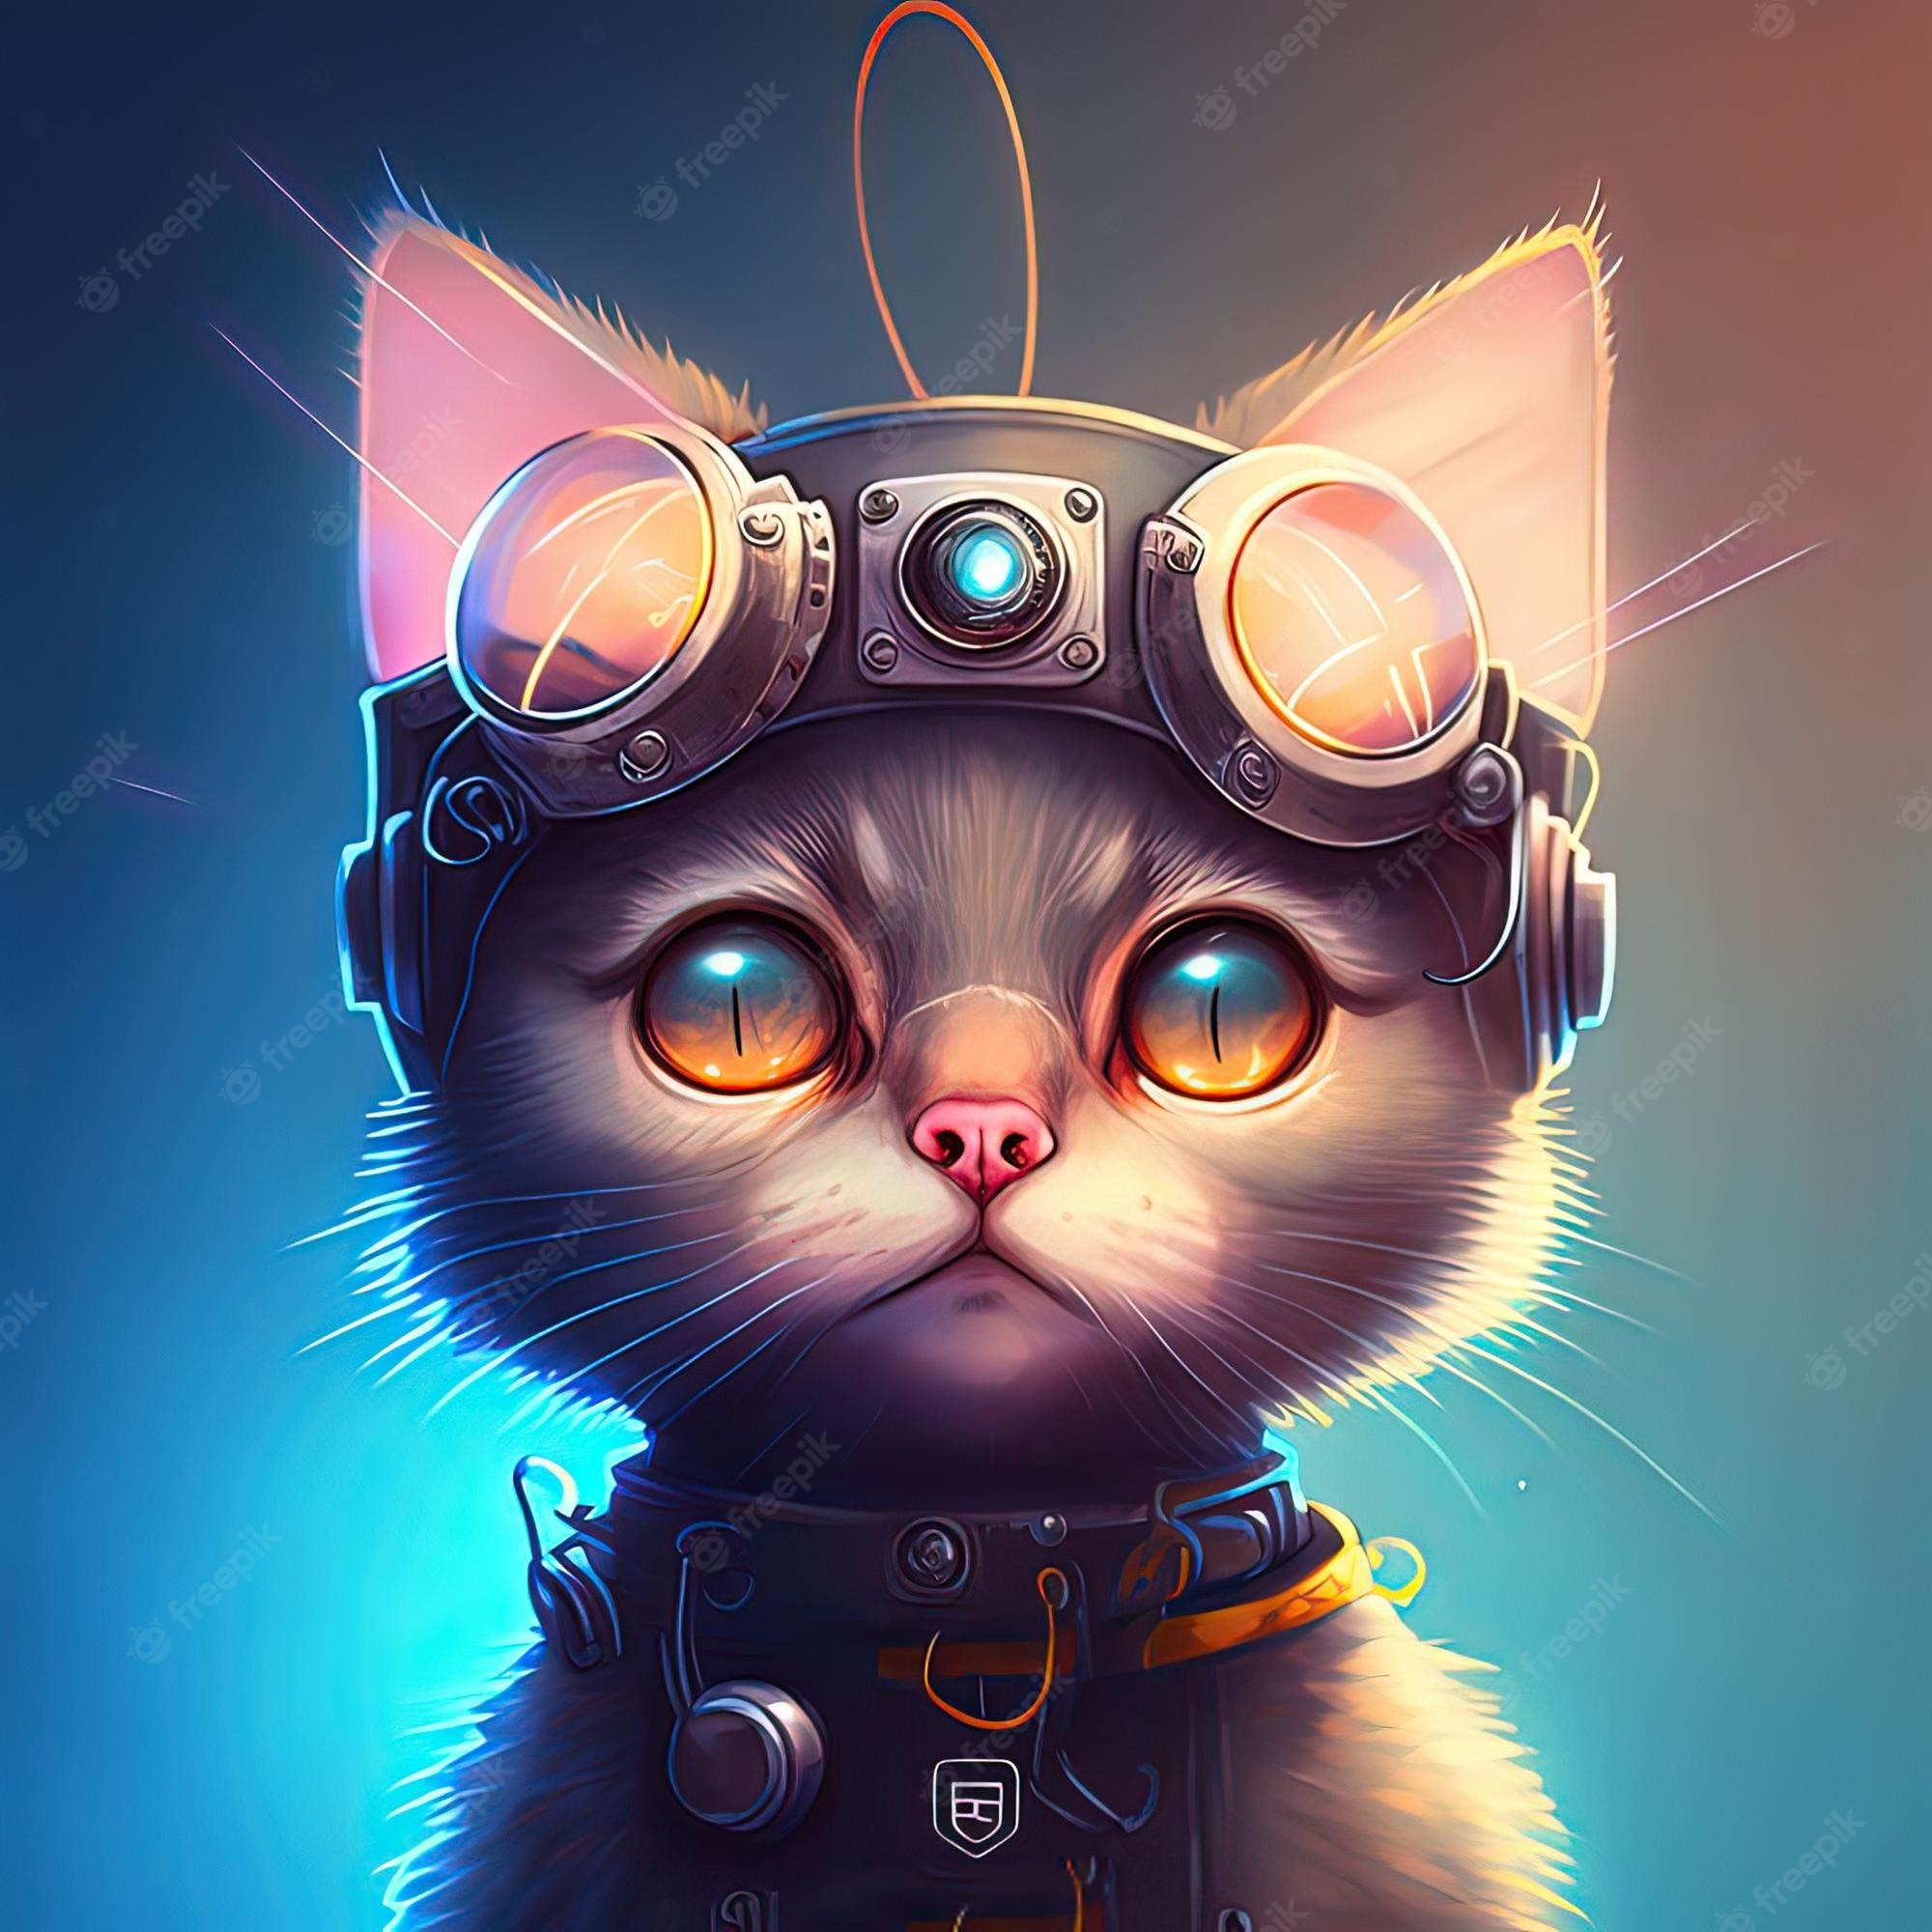 Premium Photo. Futuristic cyber cat in cyberpunk style digital art style illustration painting